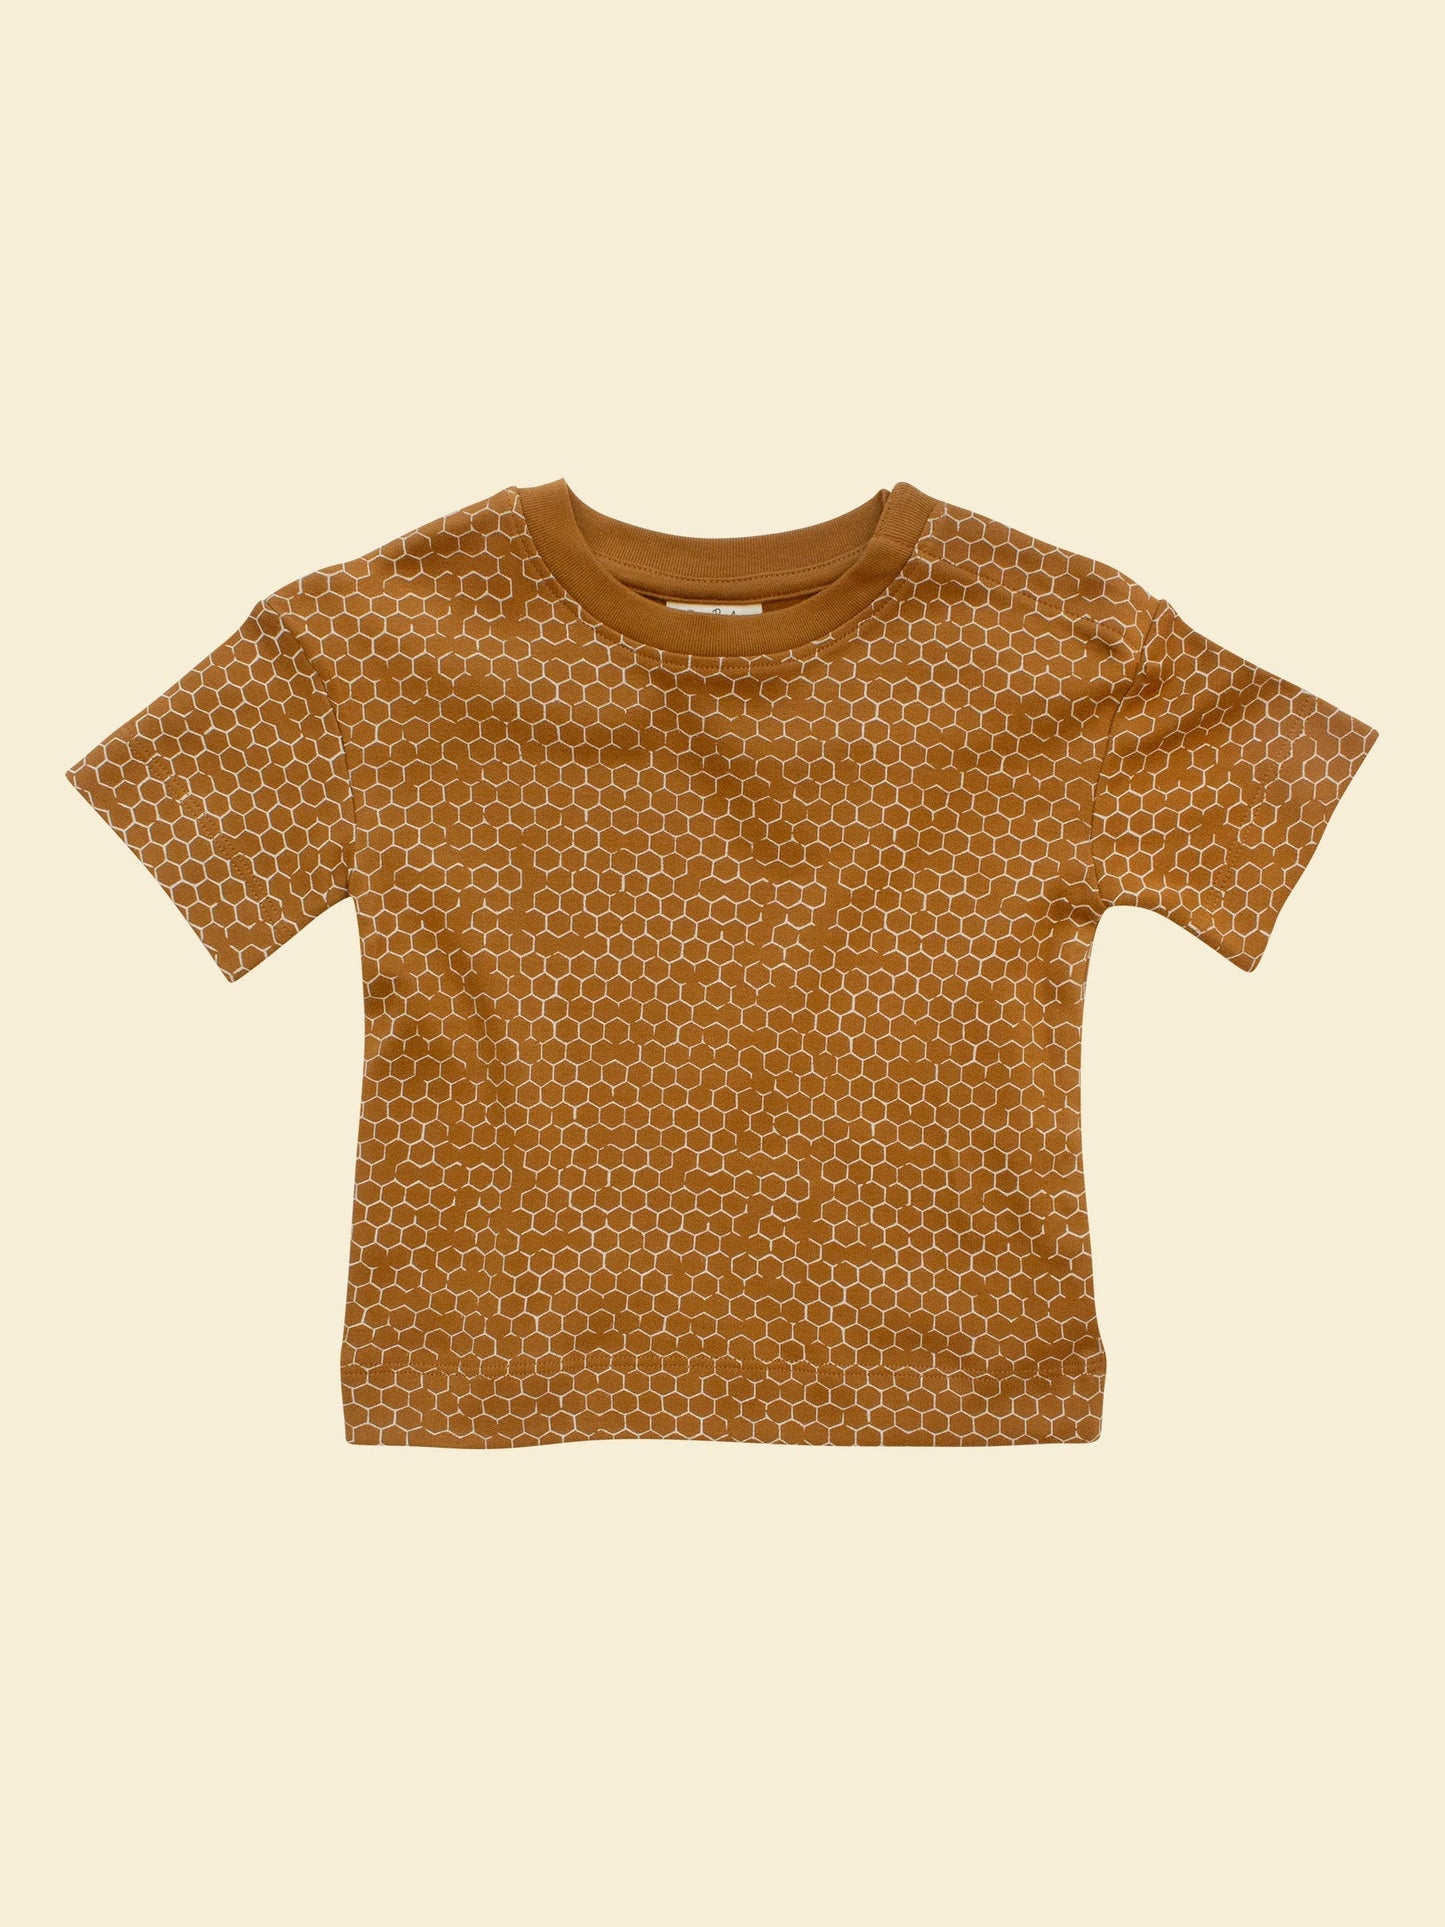 Short-sleeve tee - Honeycomb by Ziwi Baby